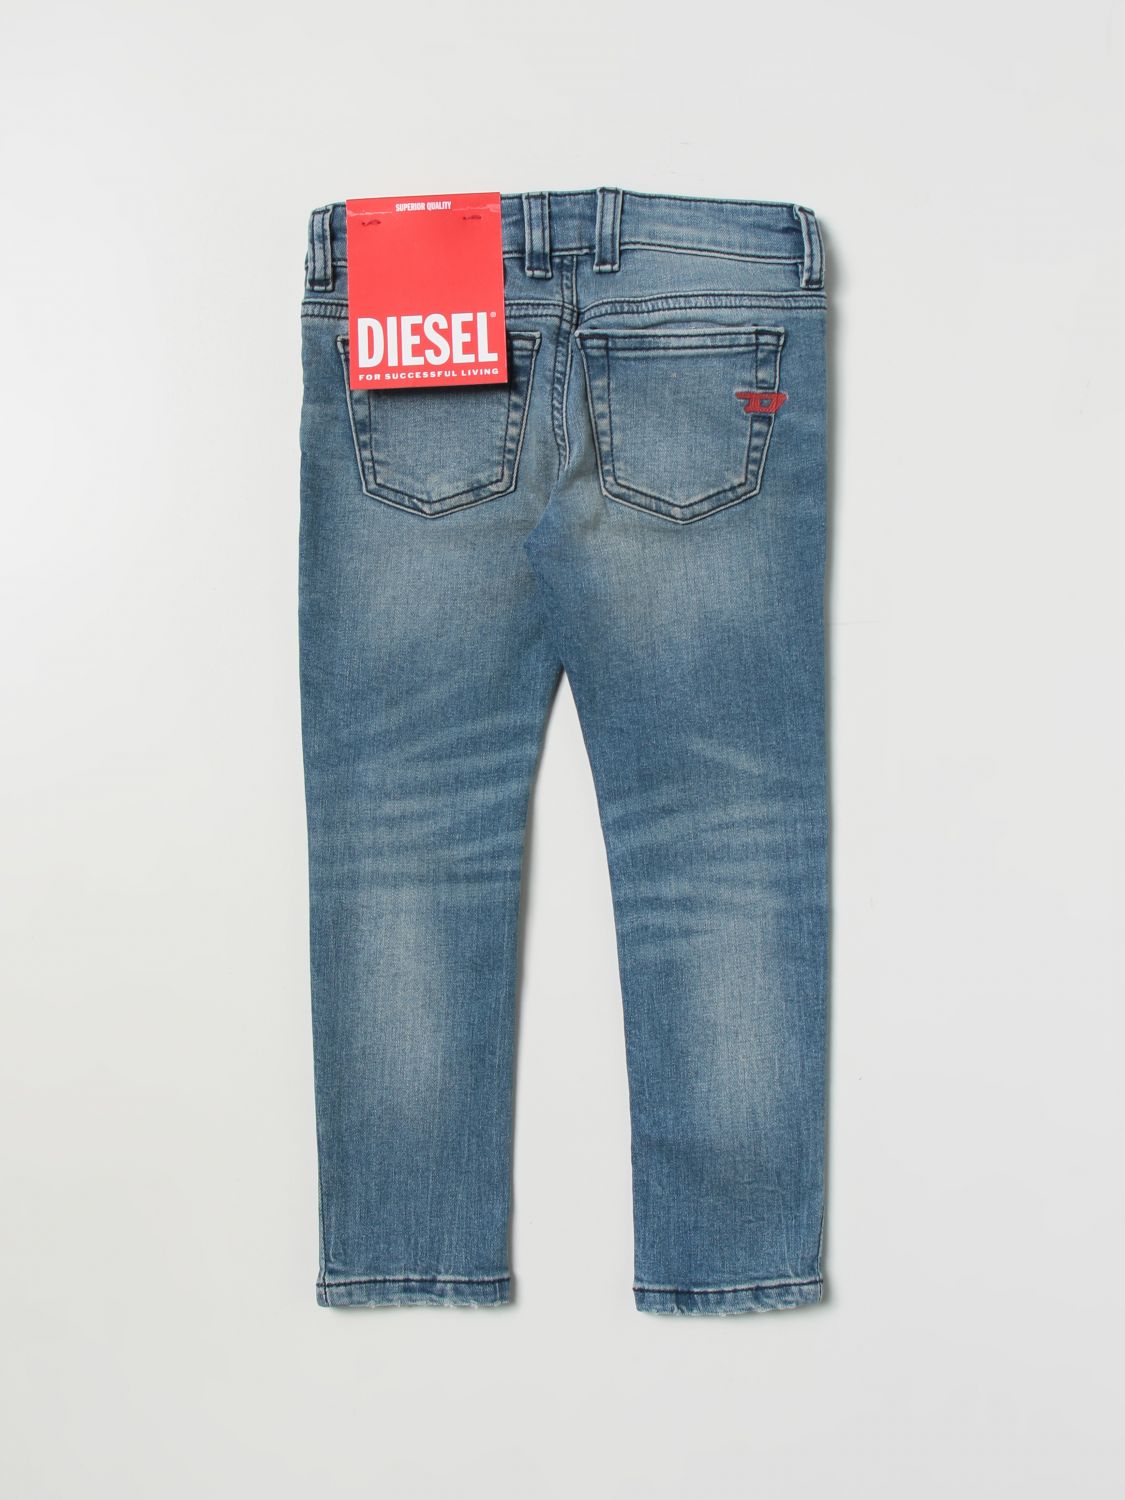 Verscherpen Inactief Toneelschrijver DIESEL: jeans for boys - Stone Washed | Diesel jeans J00807KXBEX online on  GIGLIO.COM